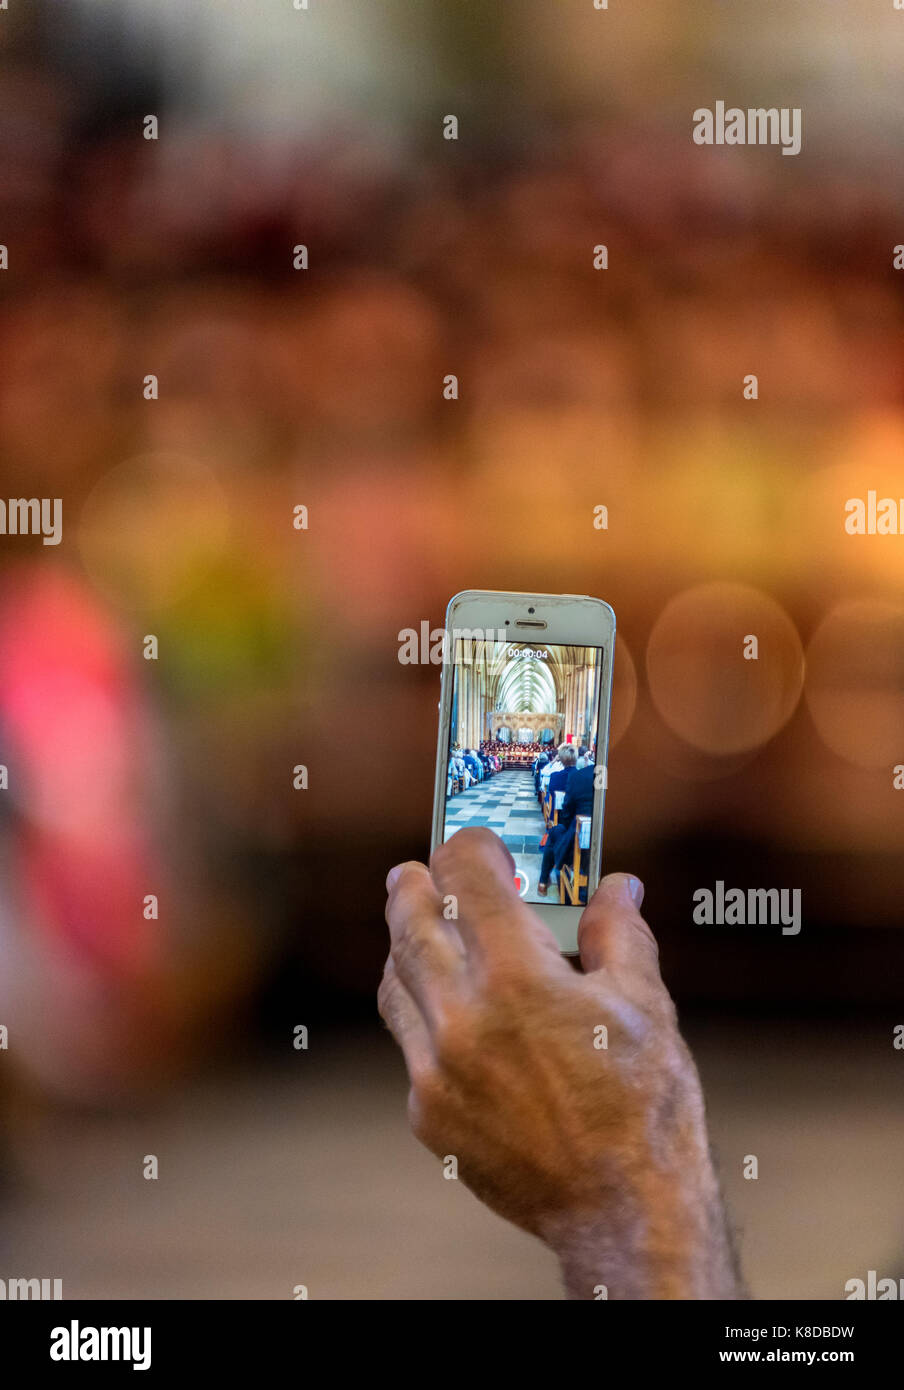 Teléfonos de segunda mano fotografías e imágenes de alta resolución - Alamy